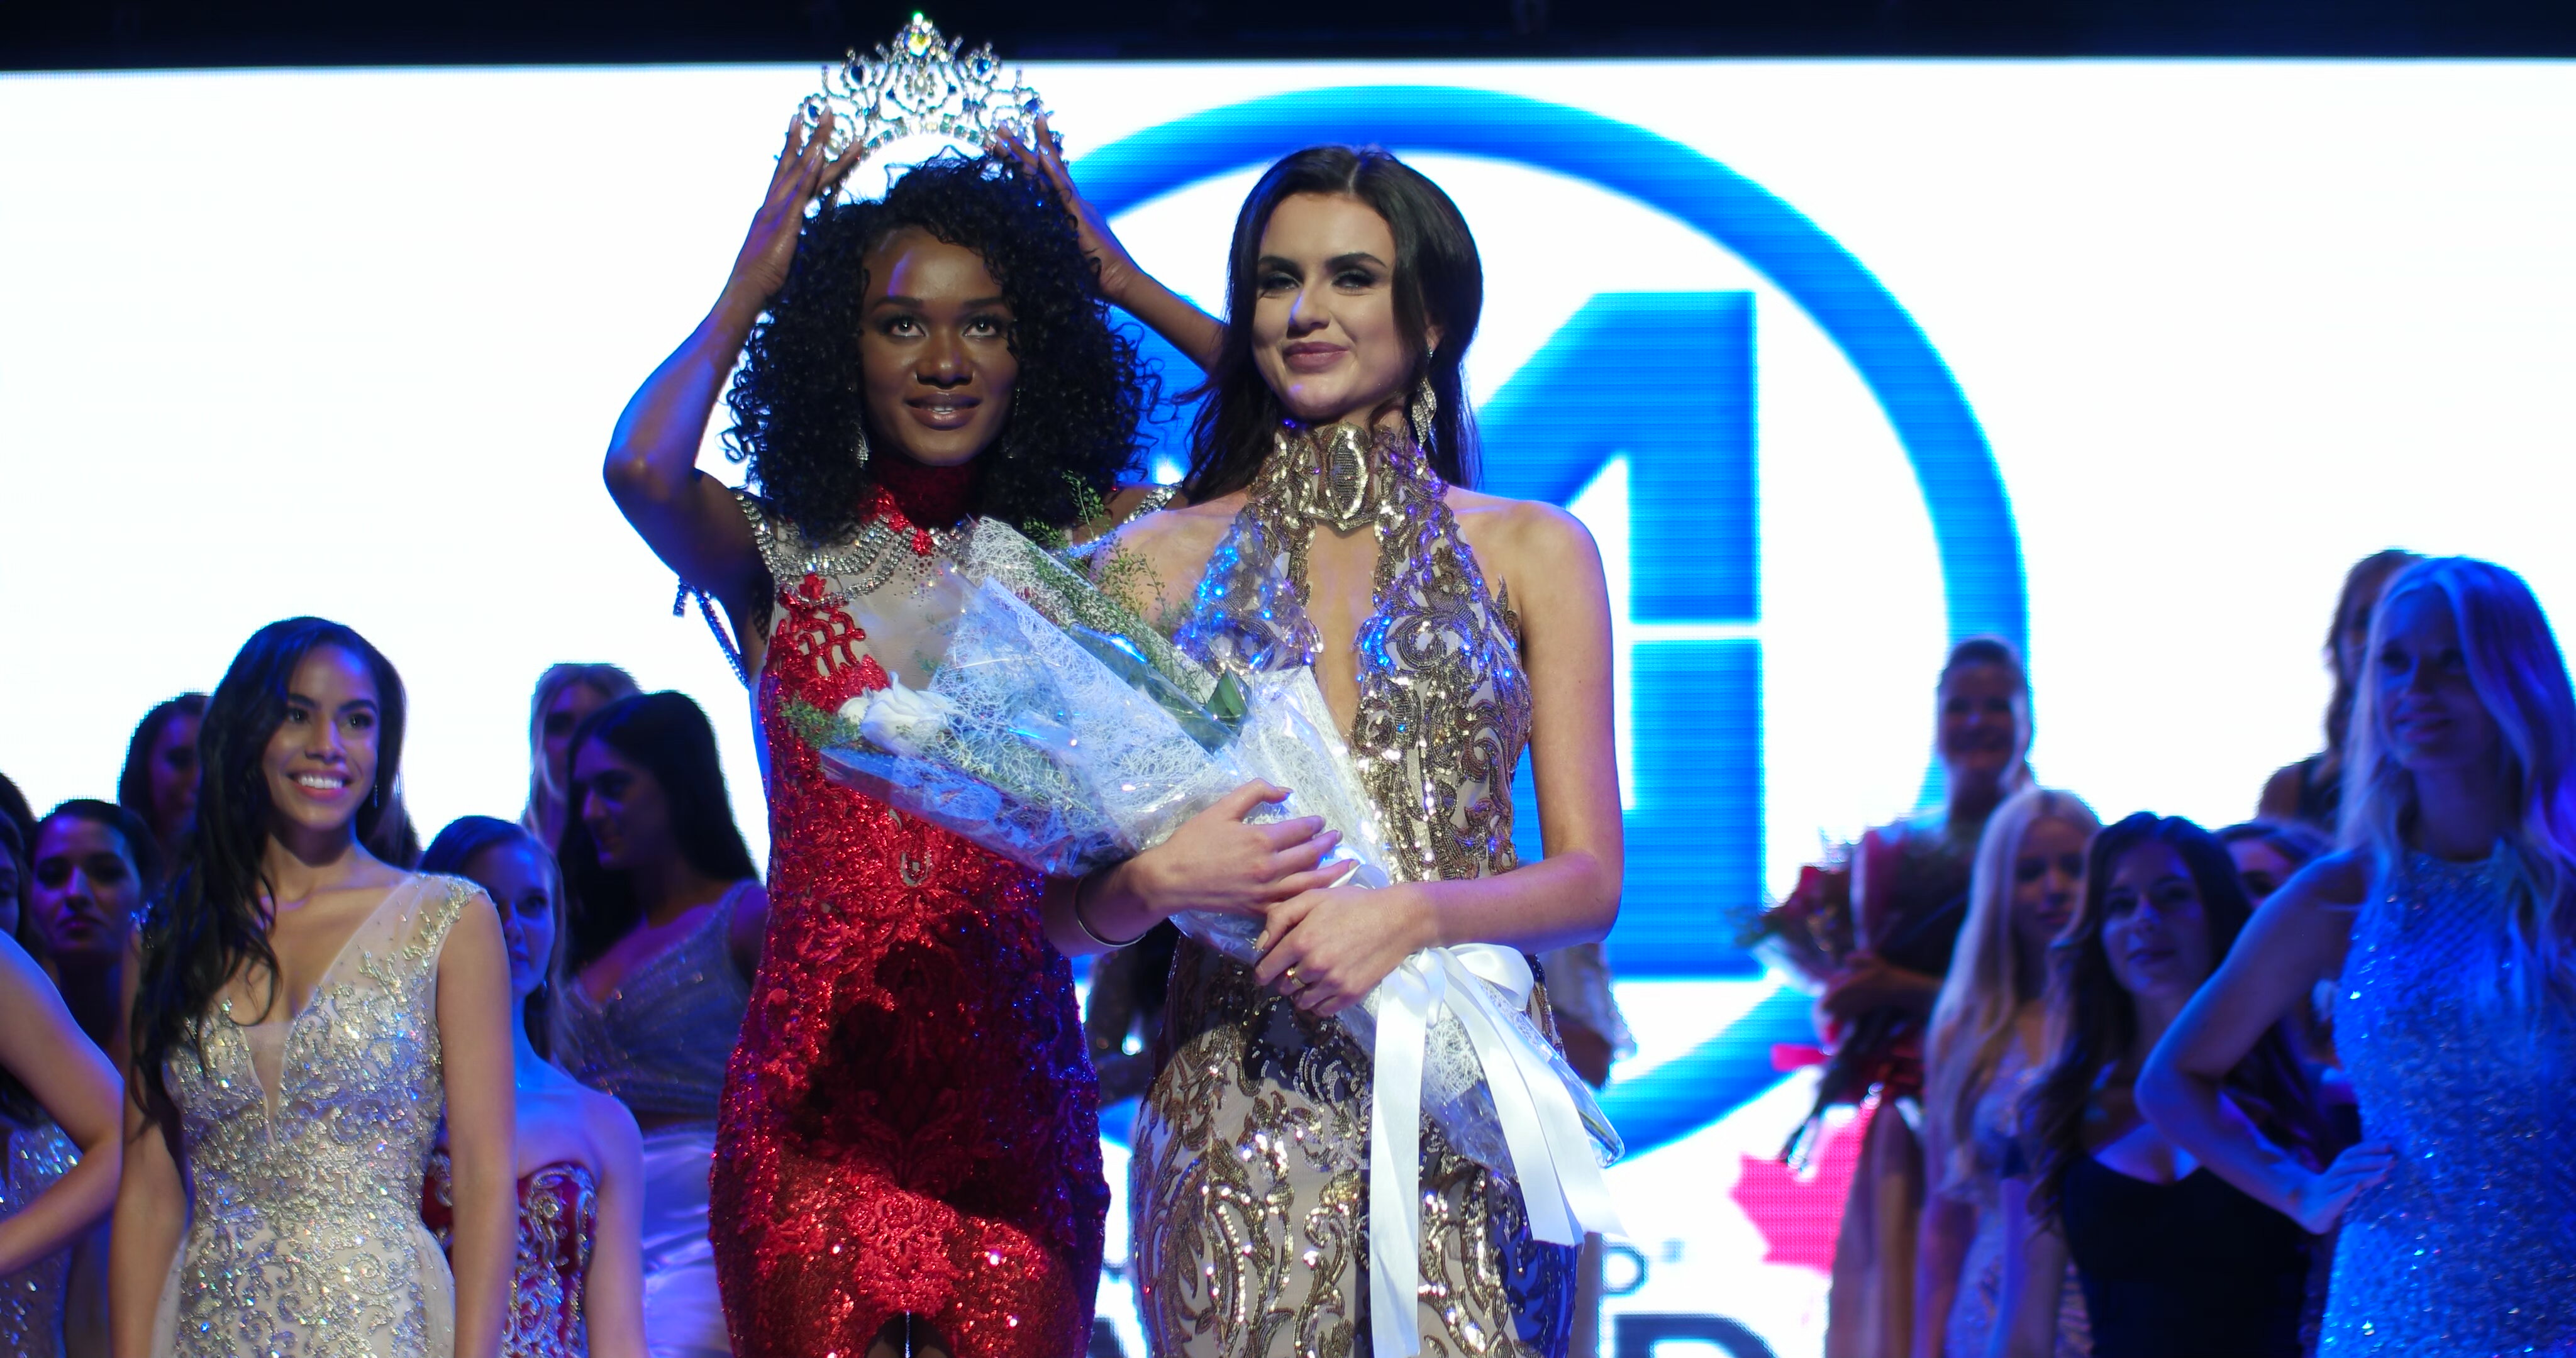 Karema Batotele crowns Alyssa Boston first runner-up, which makes her Miss Supranational Canada 2018